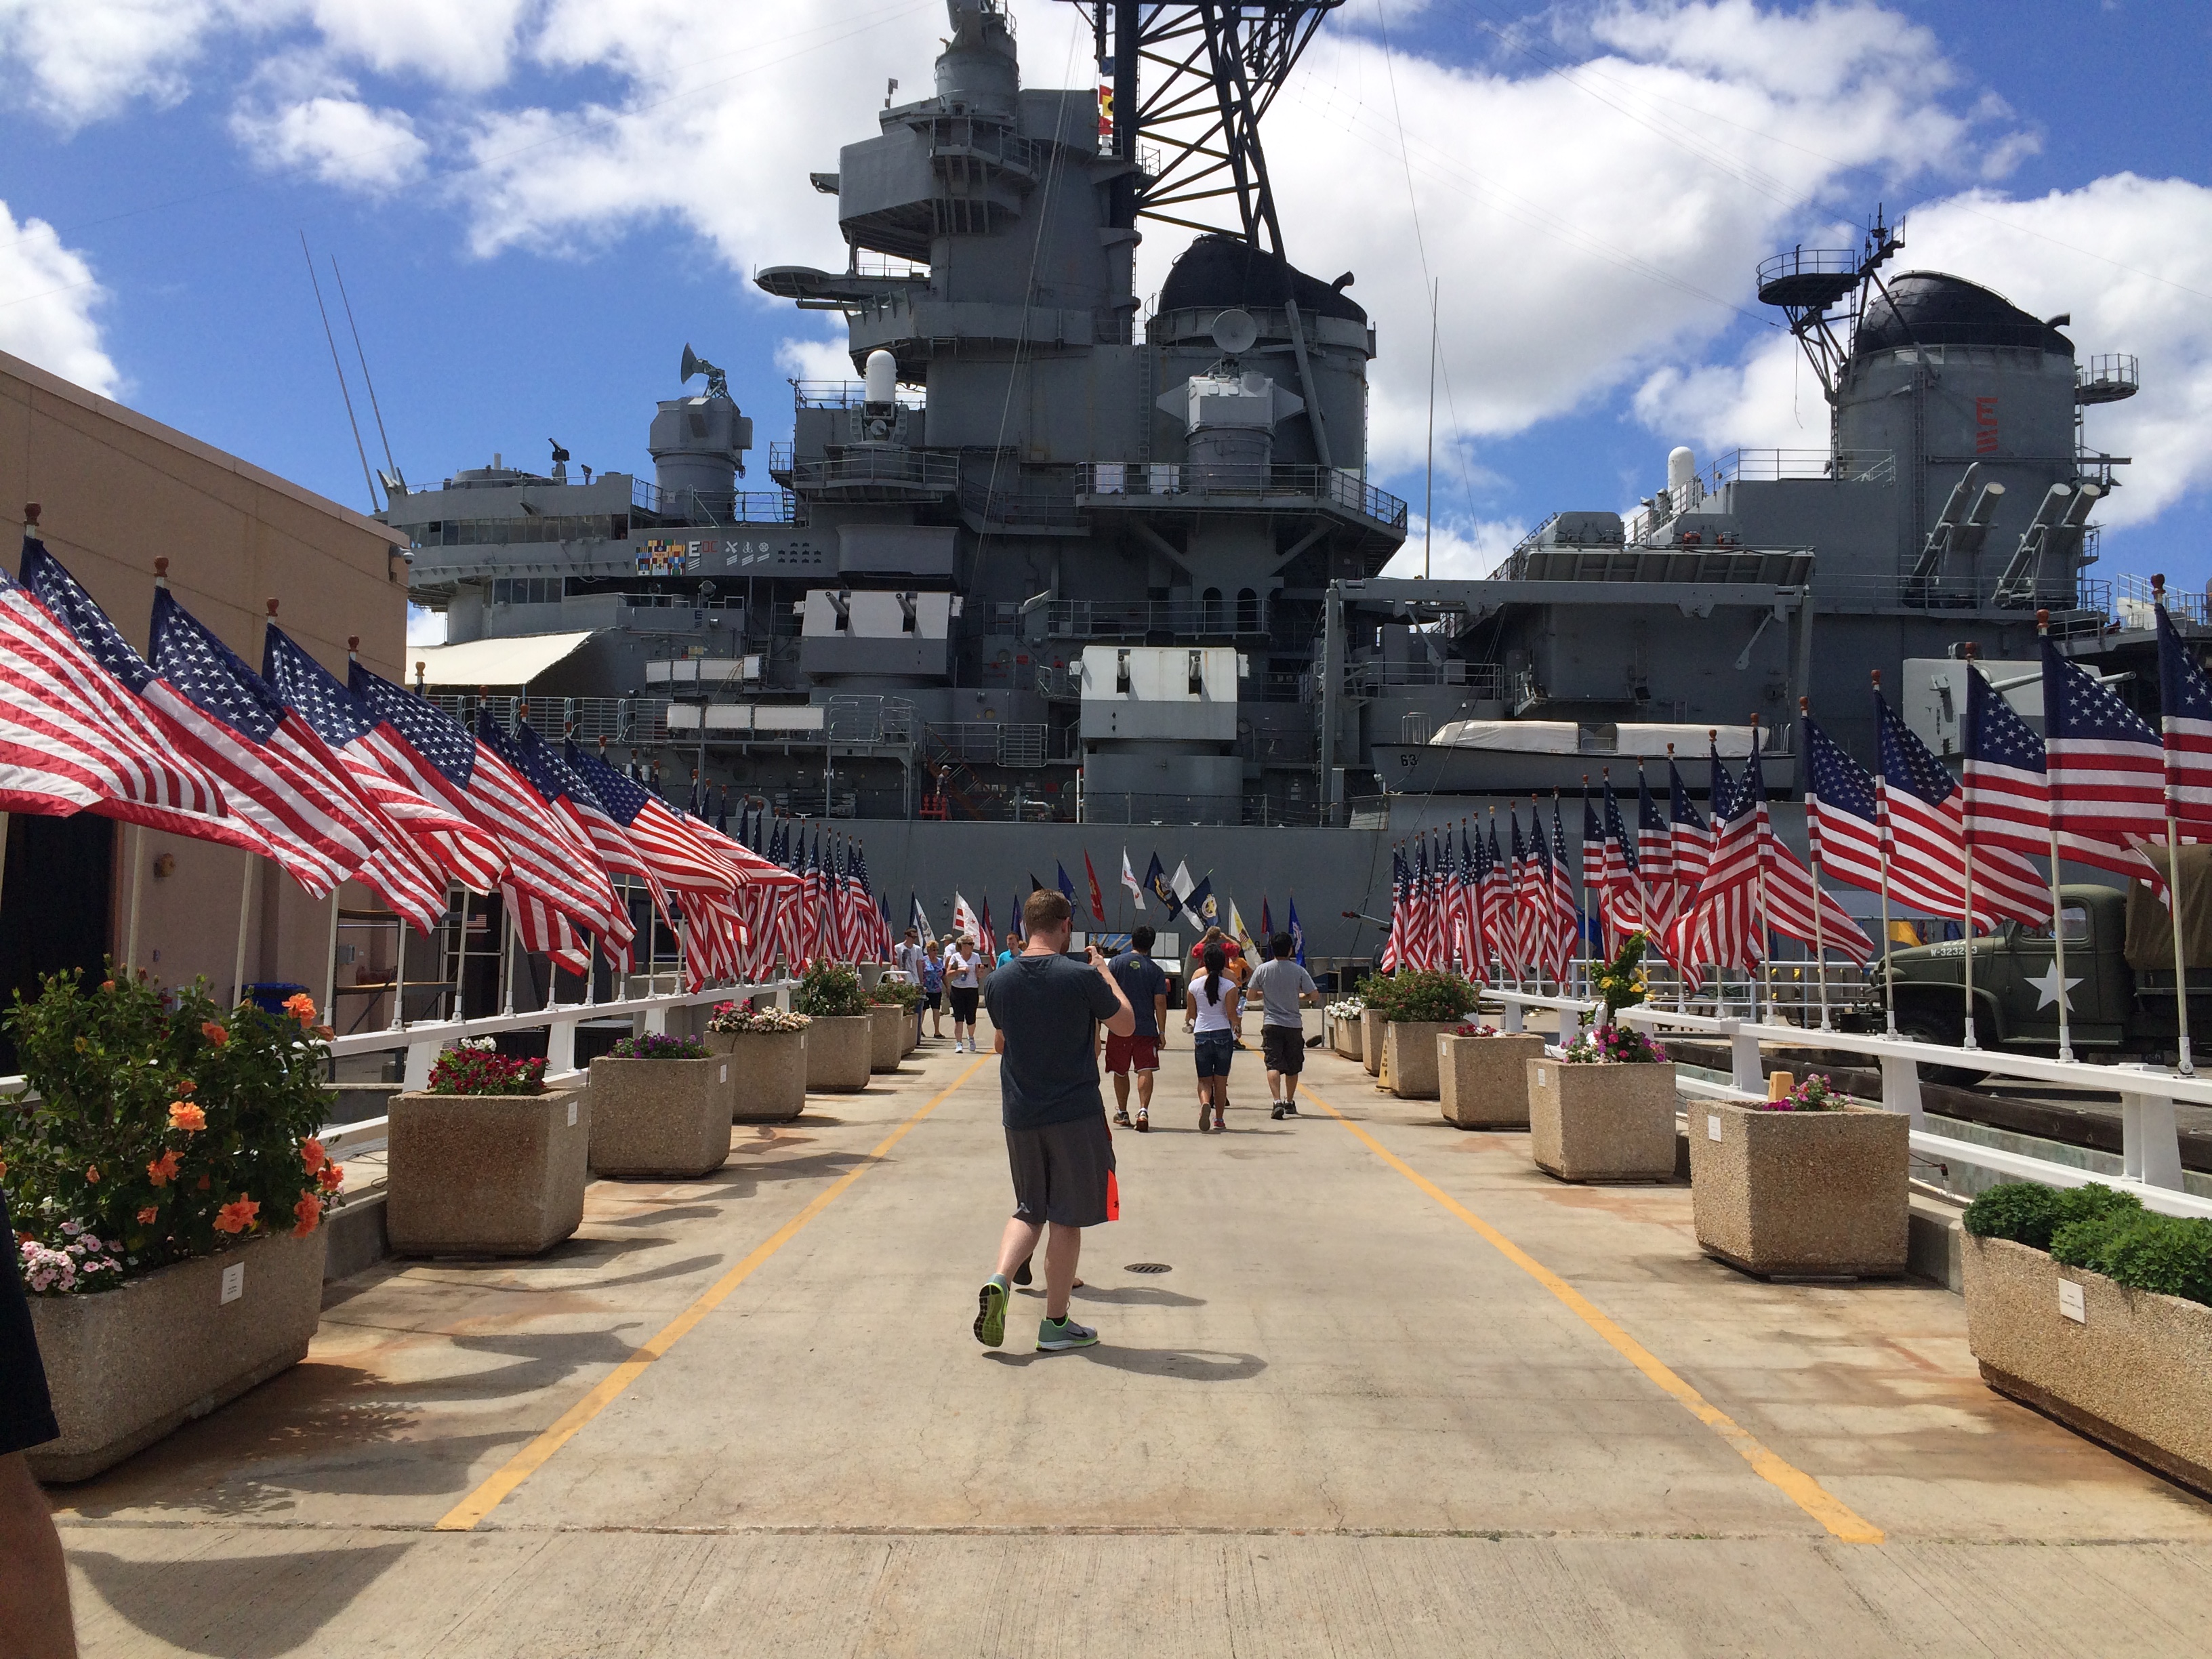 The USS Missouri in Pearl Harbor